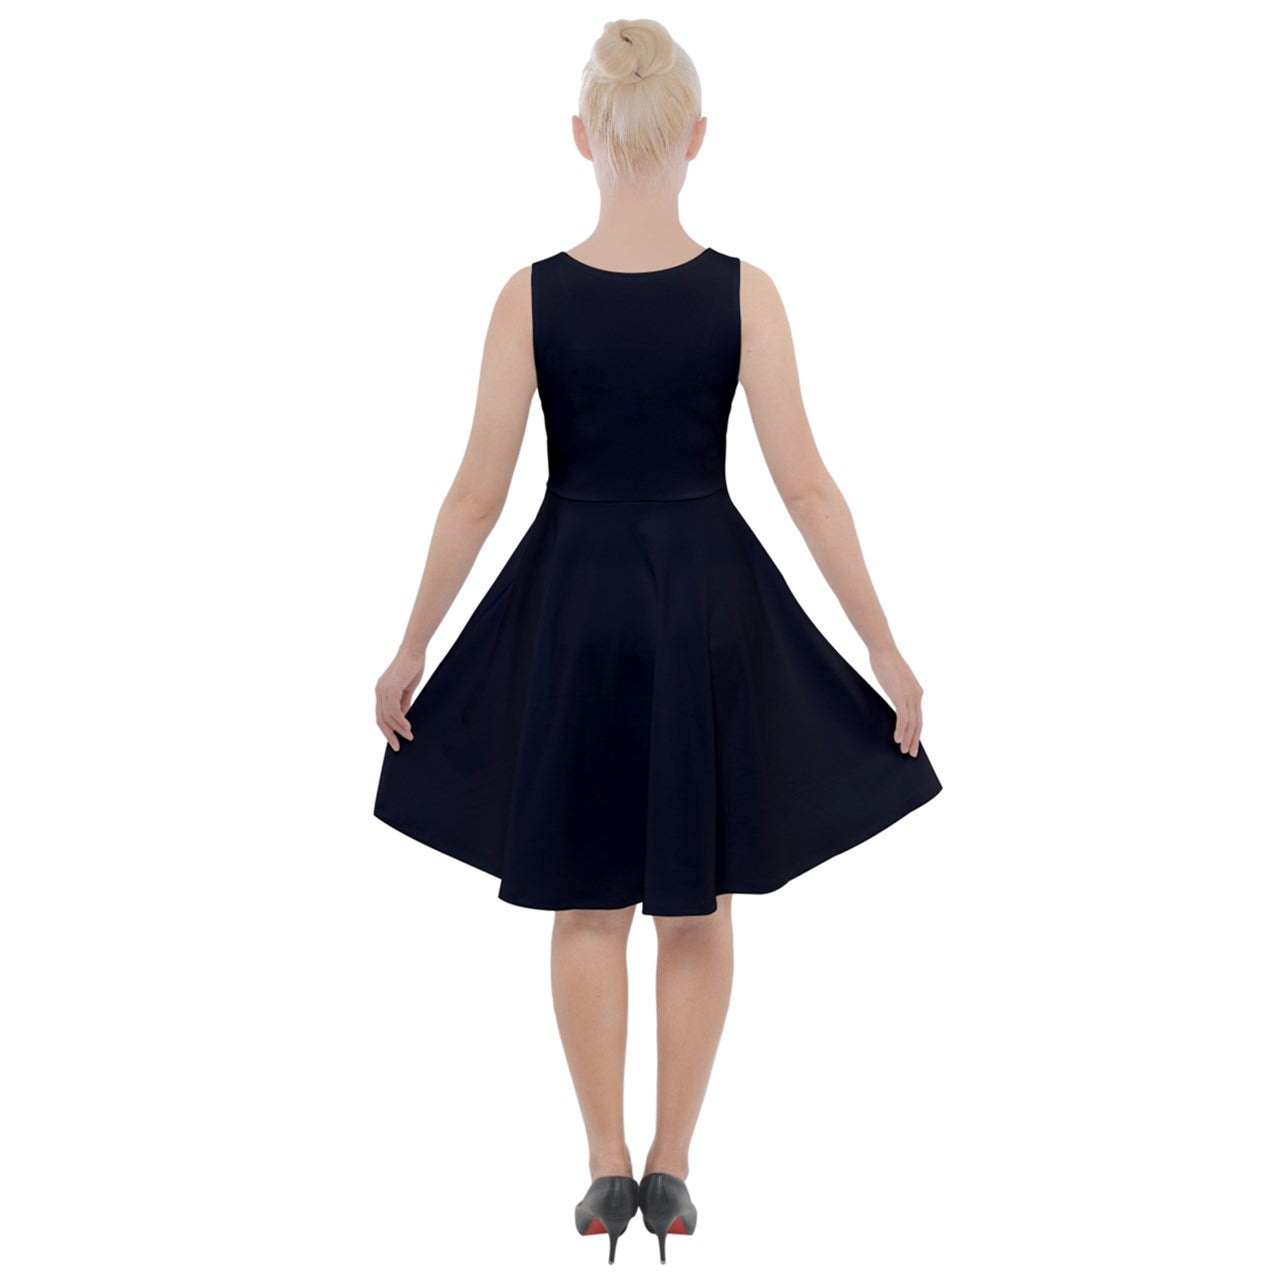 Pattern 209 Knee-Length Skater Dress with Pockets